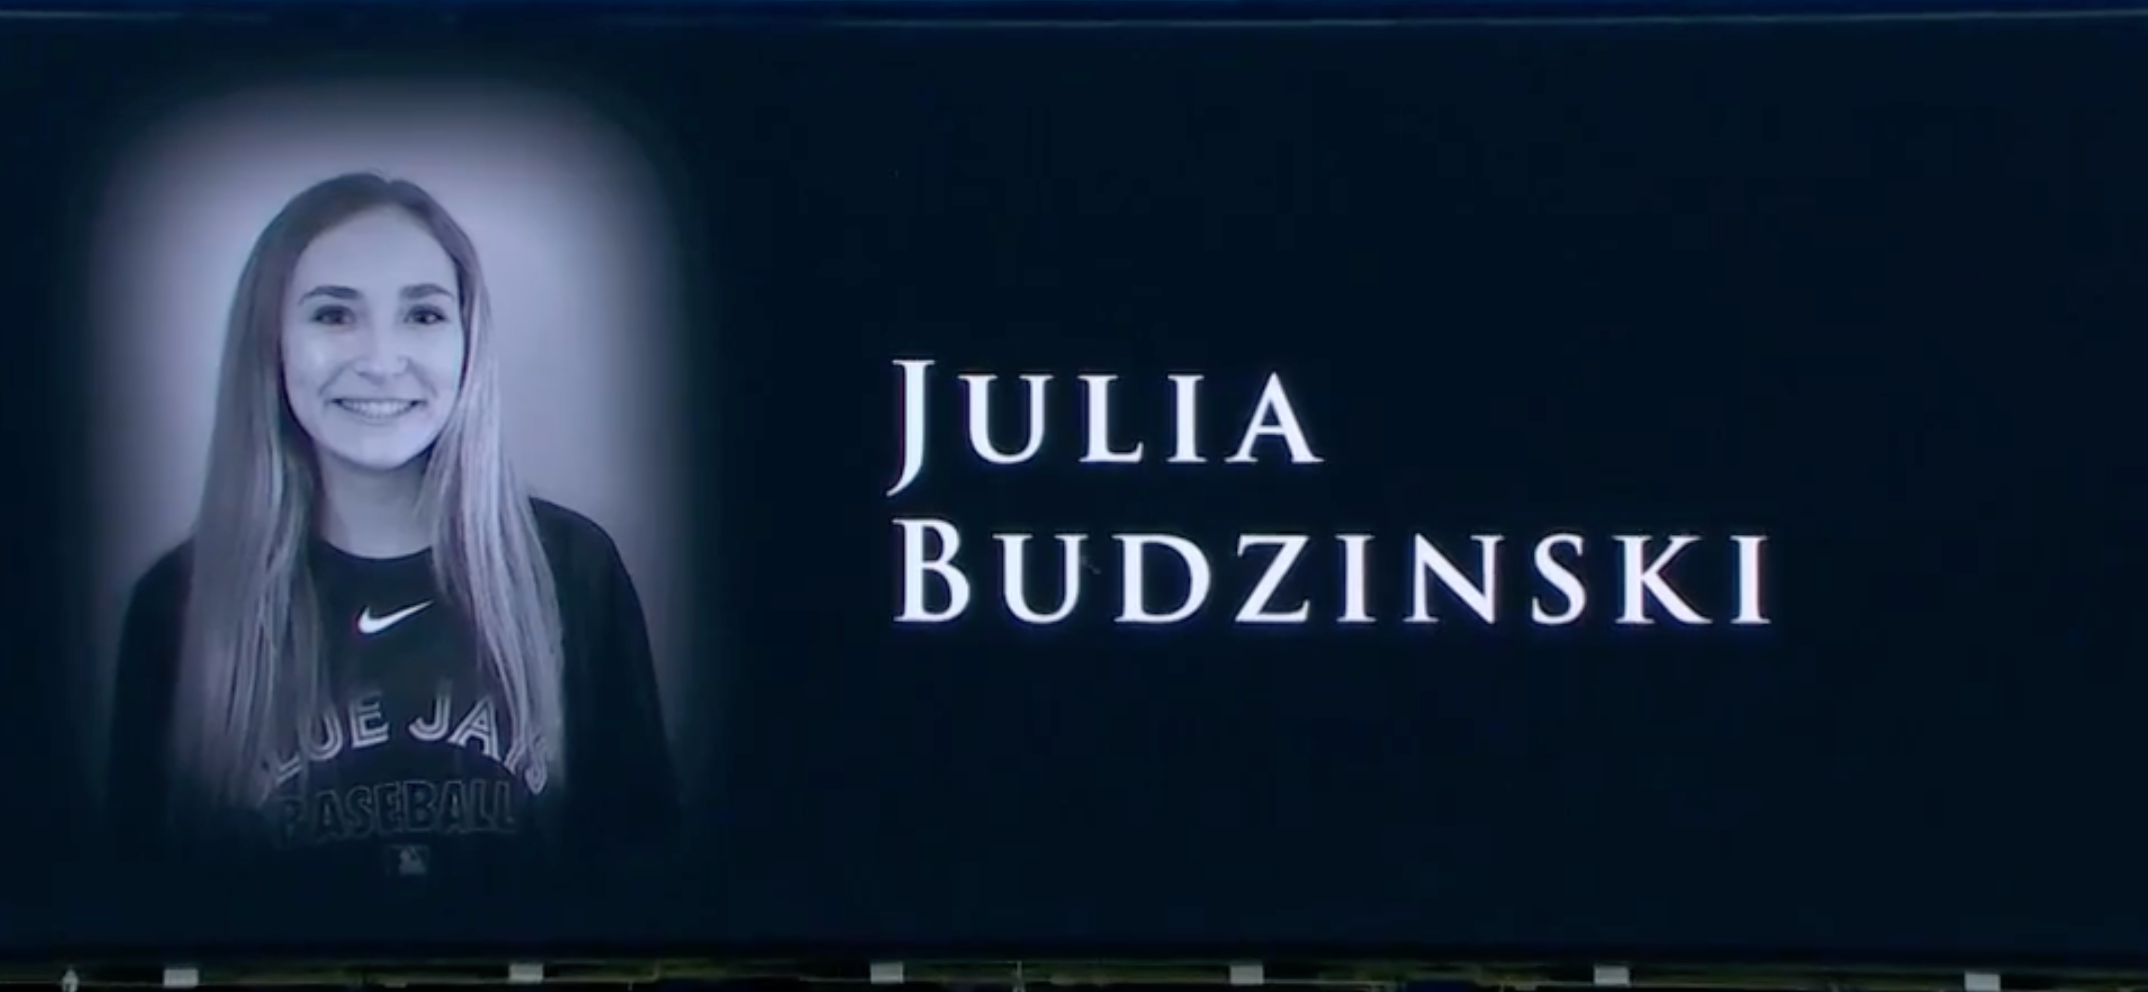 A tribute to Julia Budzinski on the scoreboard at the Rogers Centre.